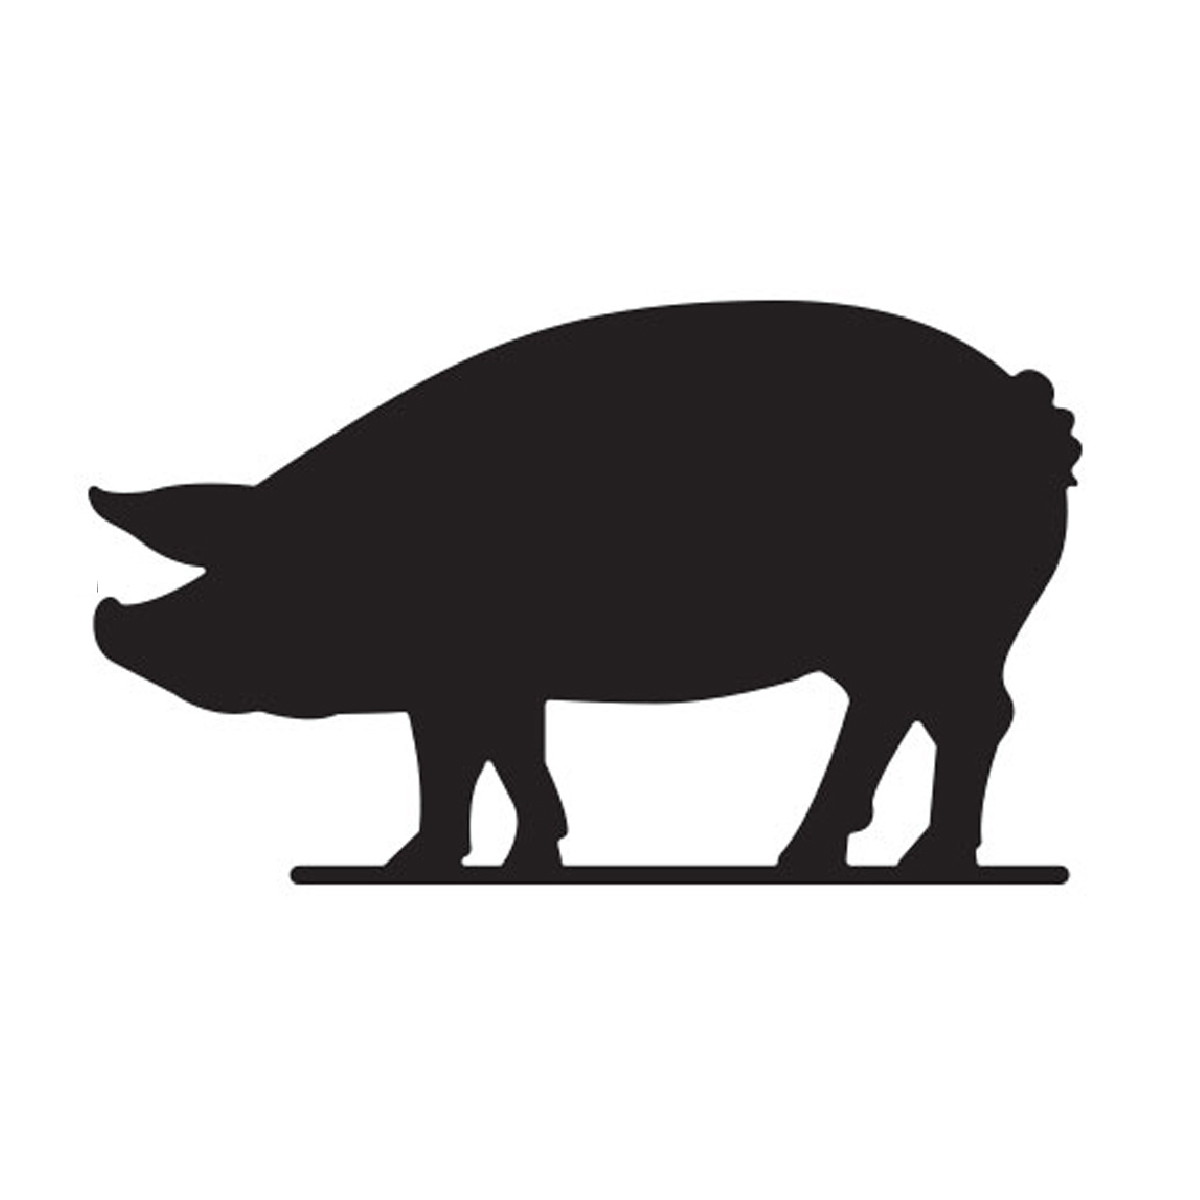 Меловая табличка "Хрюшка" BB PIG